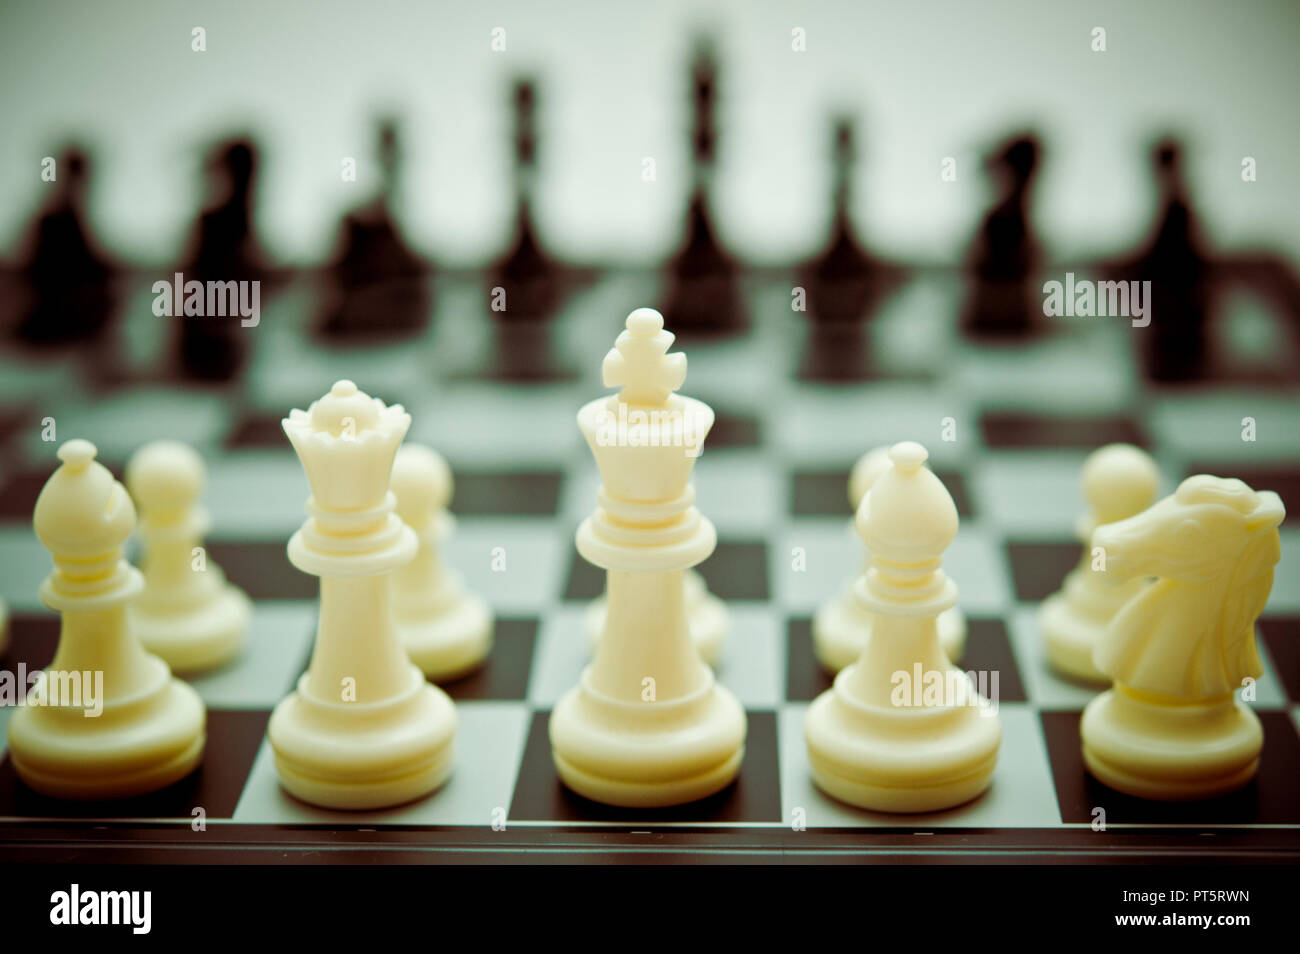 Posición inicial de ajedrez fotografías e imágenes de alta resolución -  Alamy